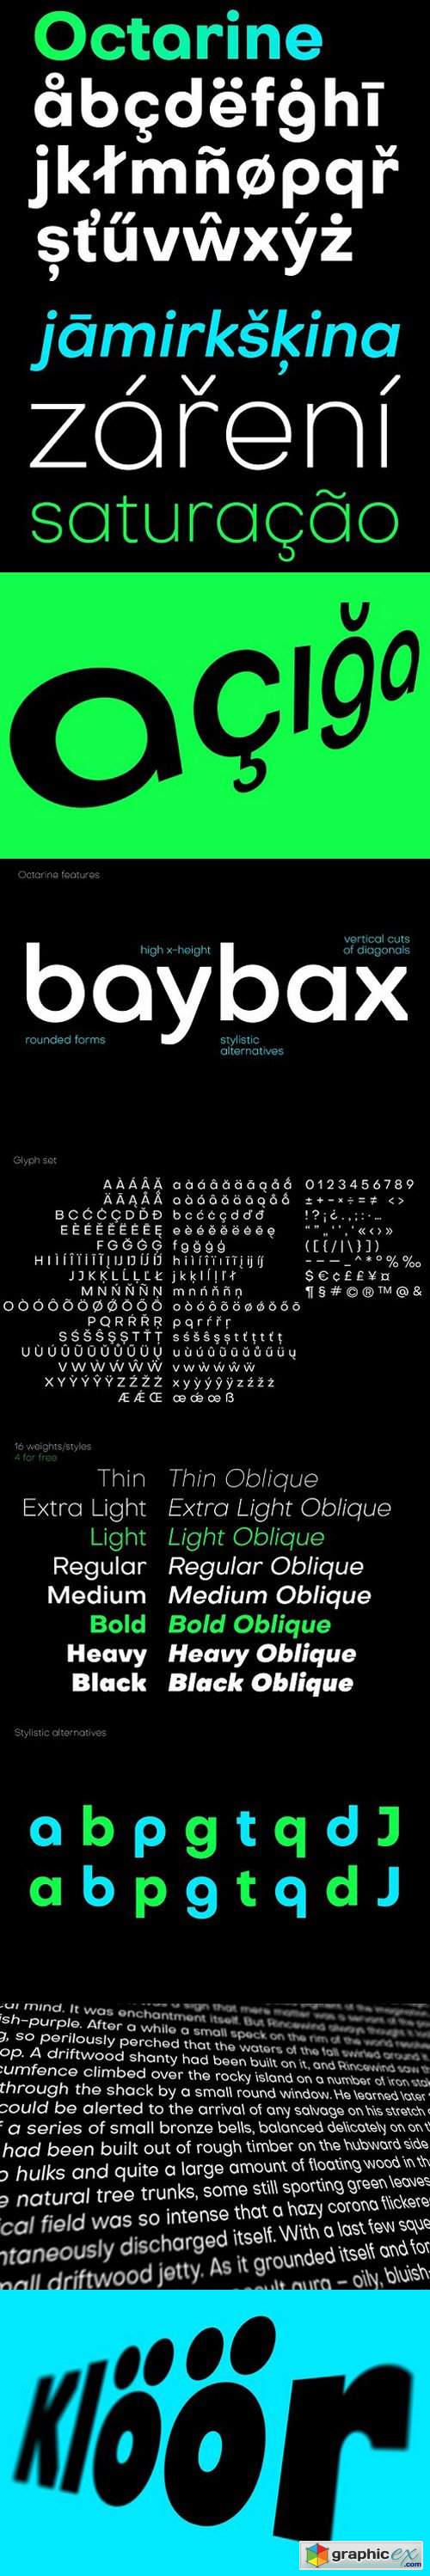  Octarine 16 fonts 